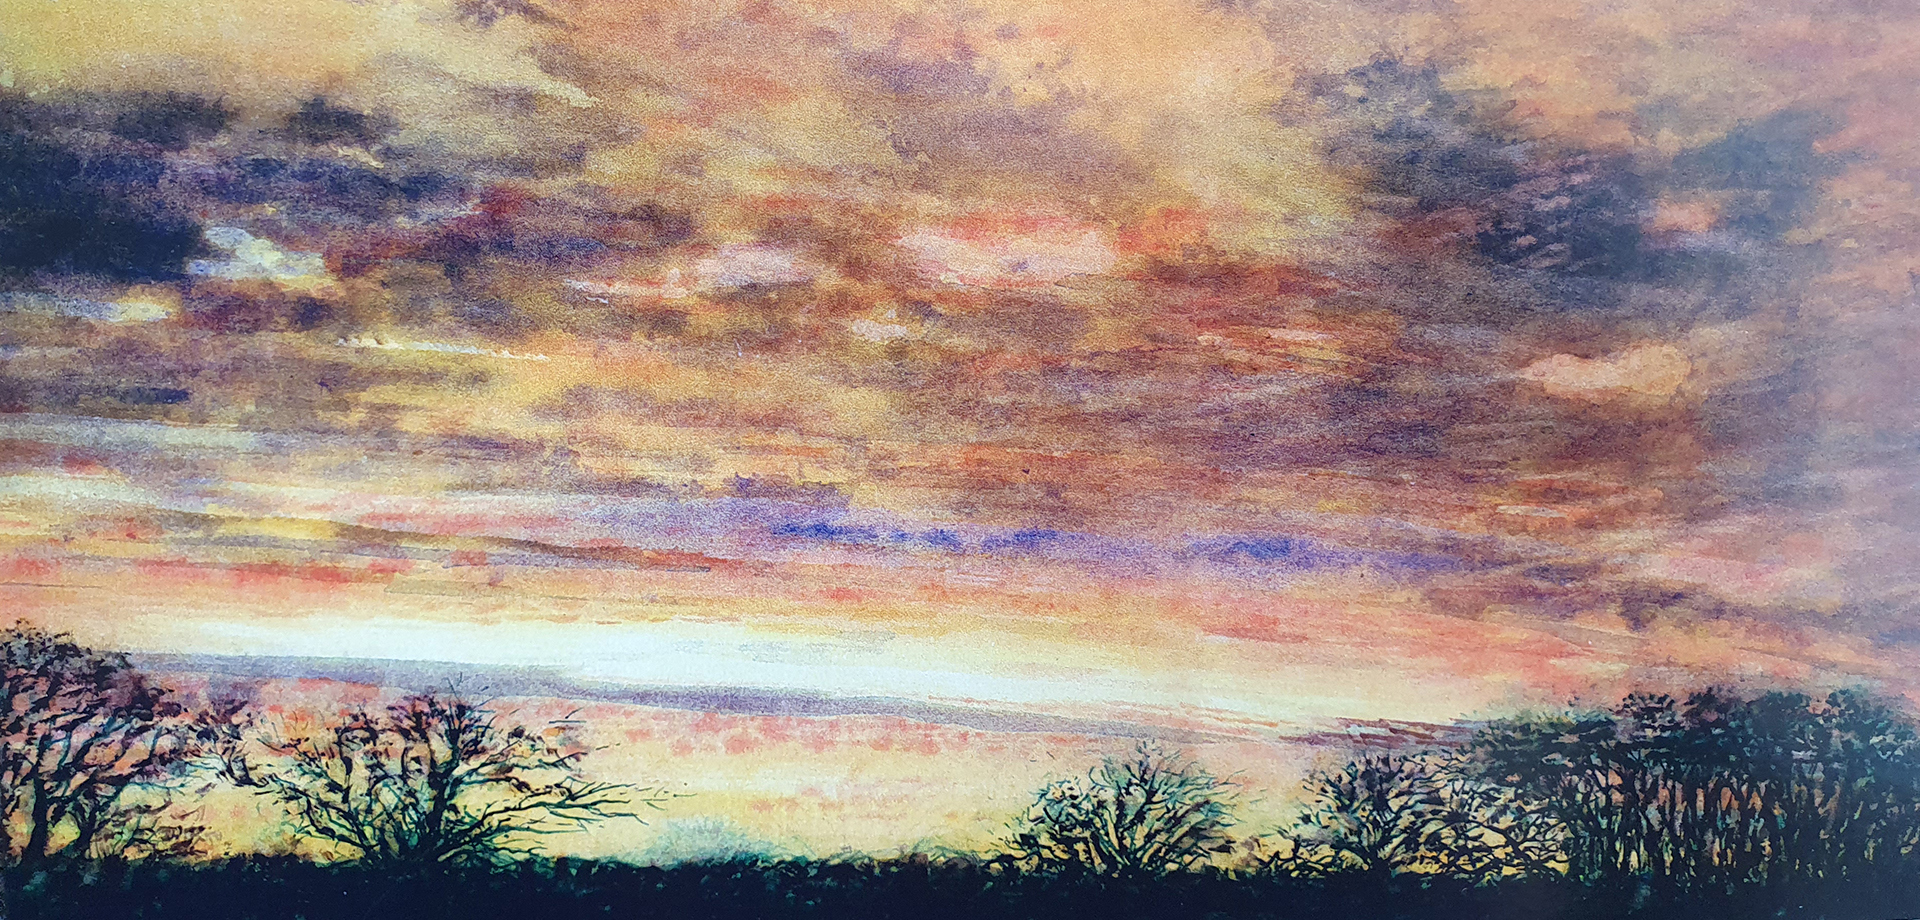 Sunset painting: Radical Horizons